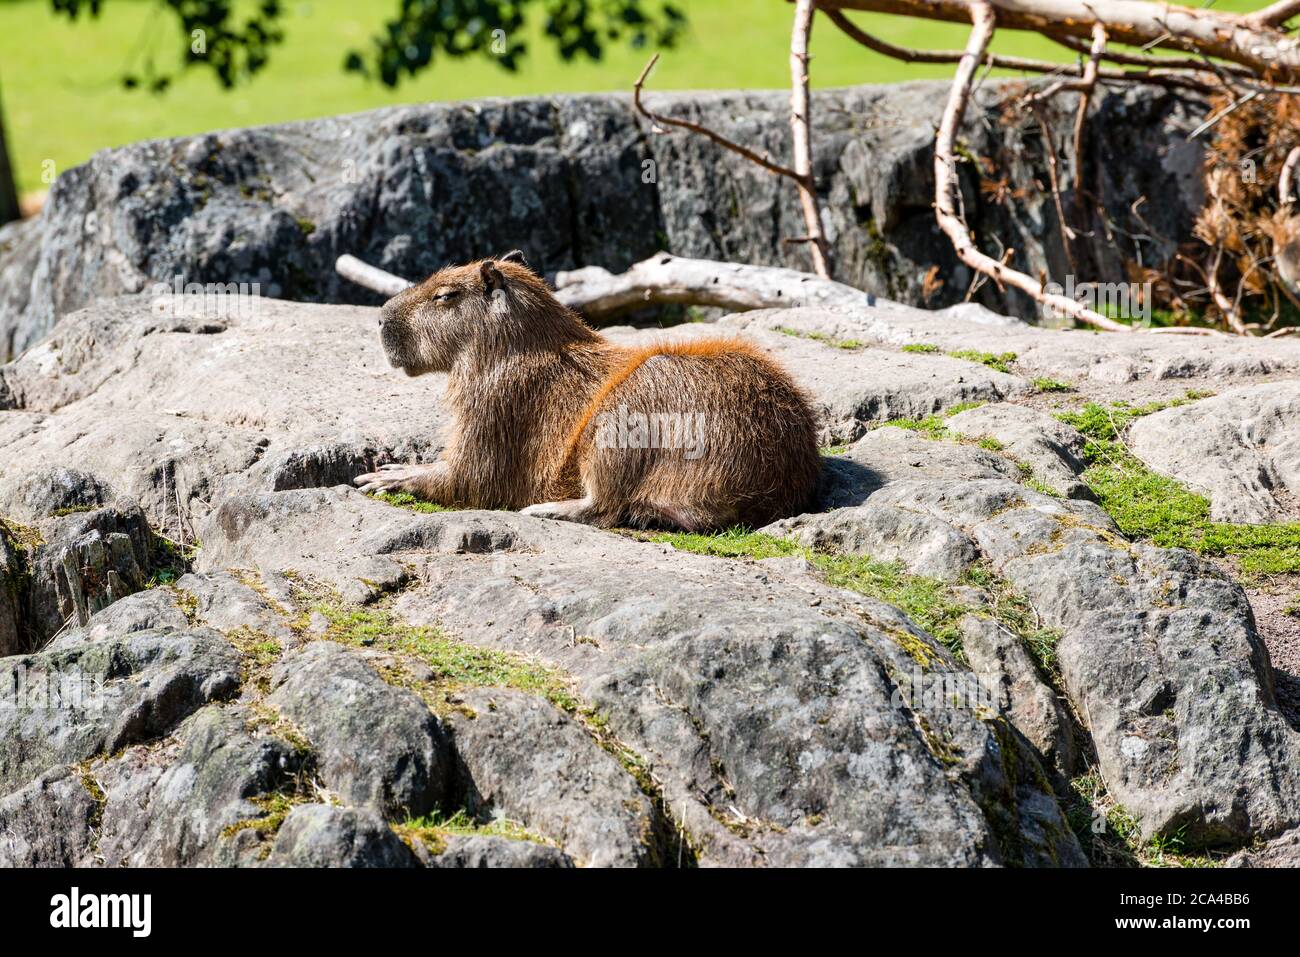 The capybara (Hydrochoerus hydrochaeris) is a mammal native to South America. Stock Photo